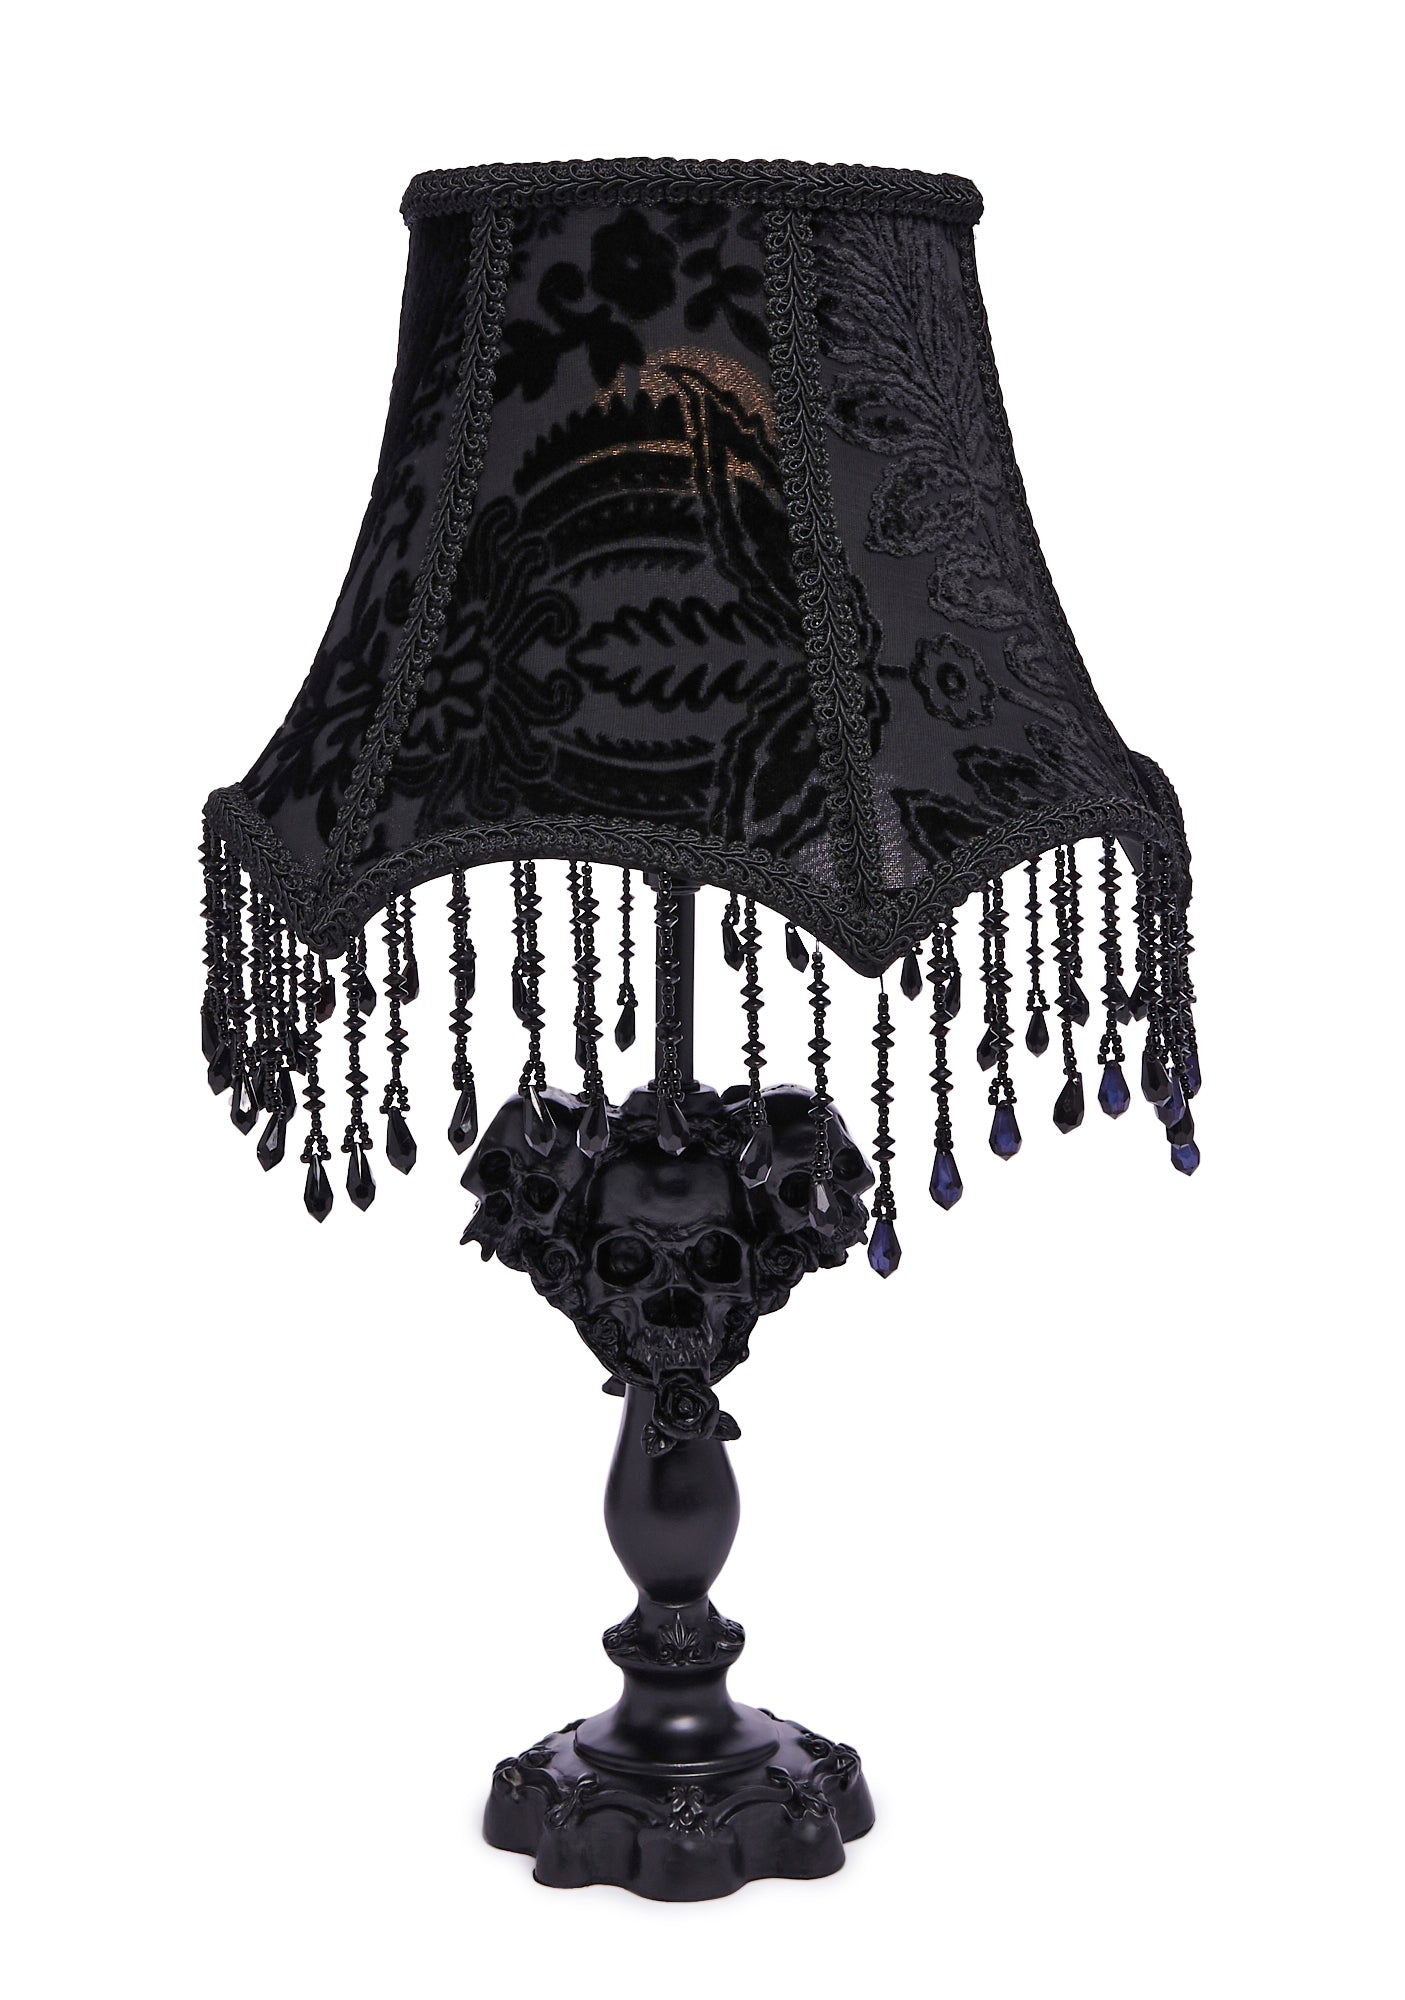 Dark Serenity Table Lamp